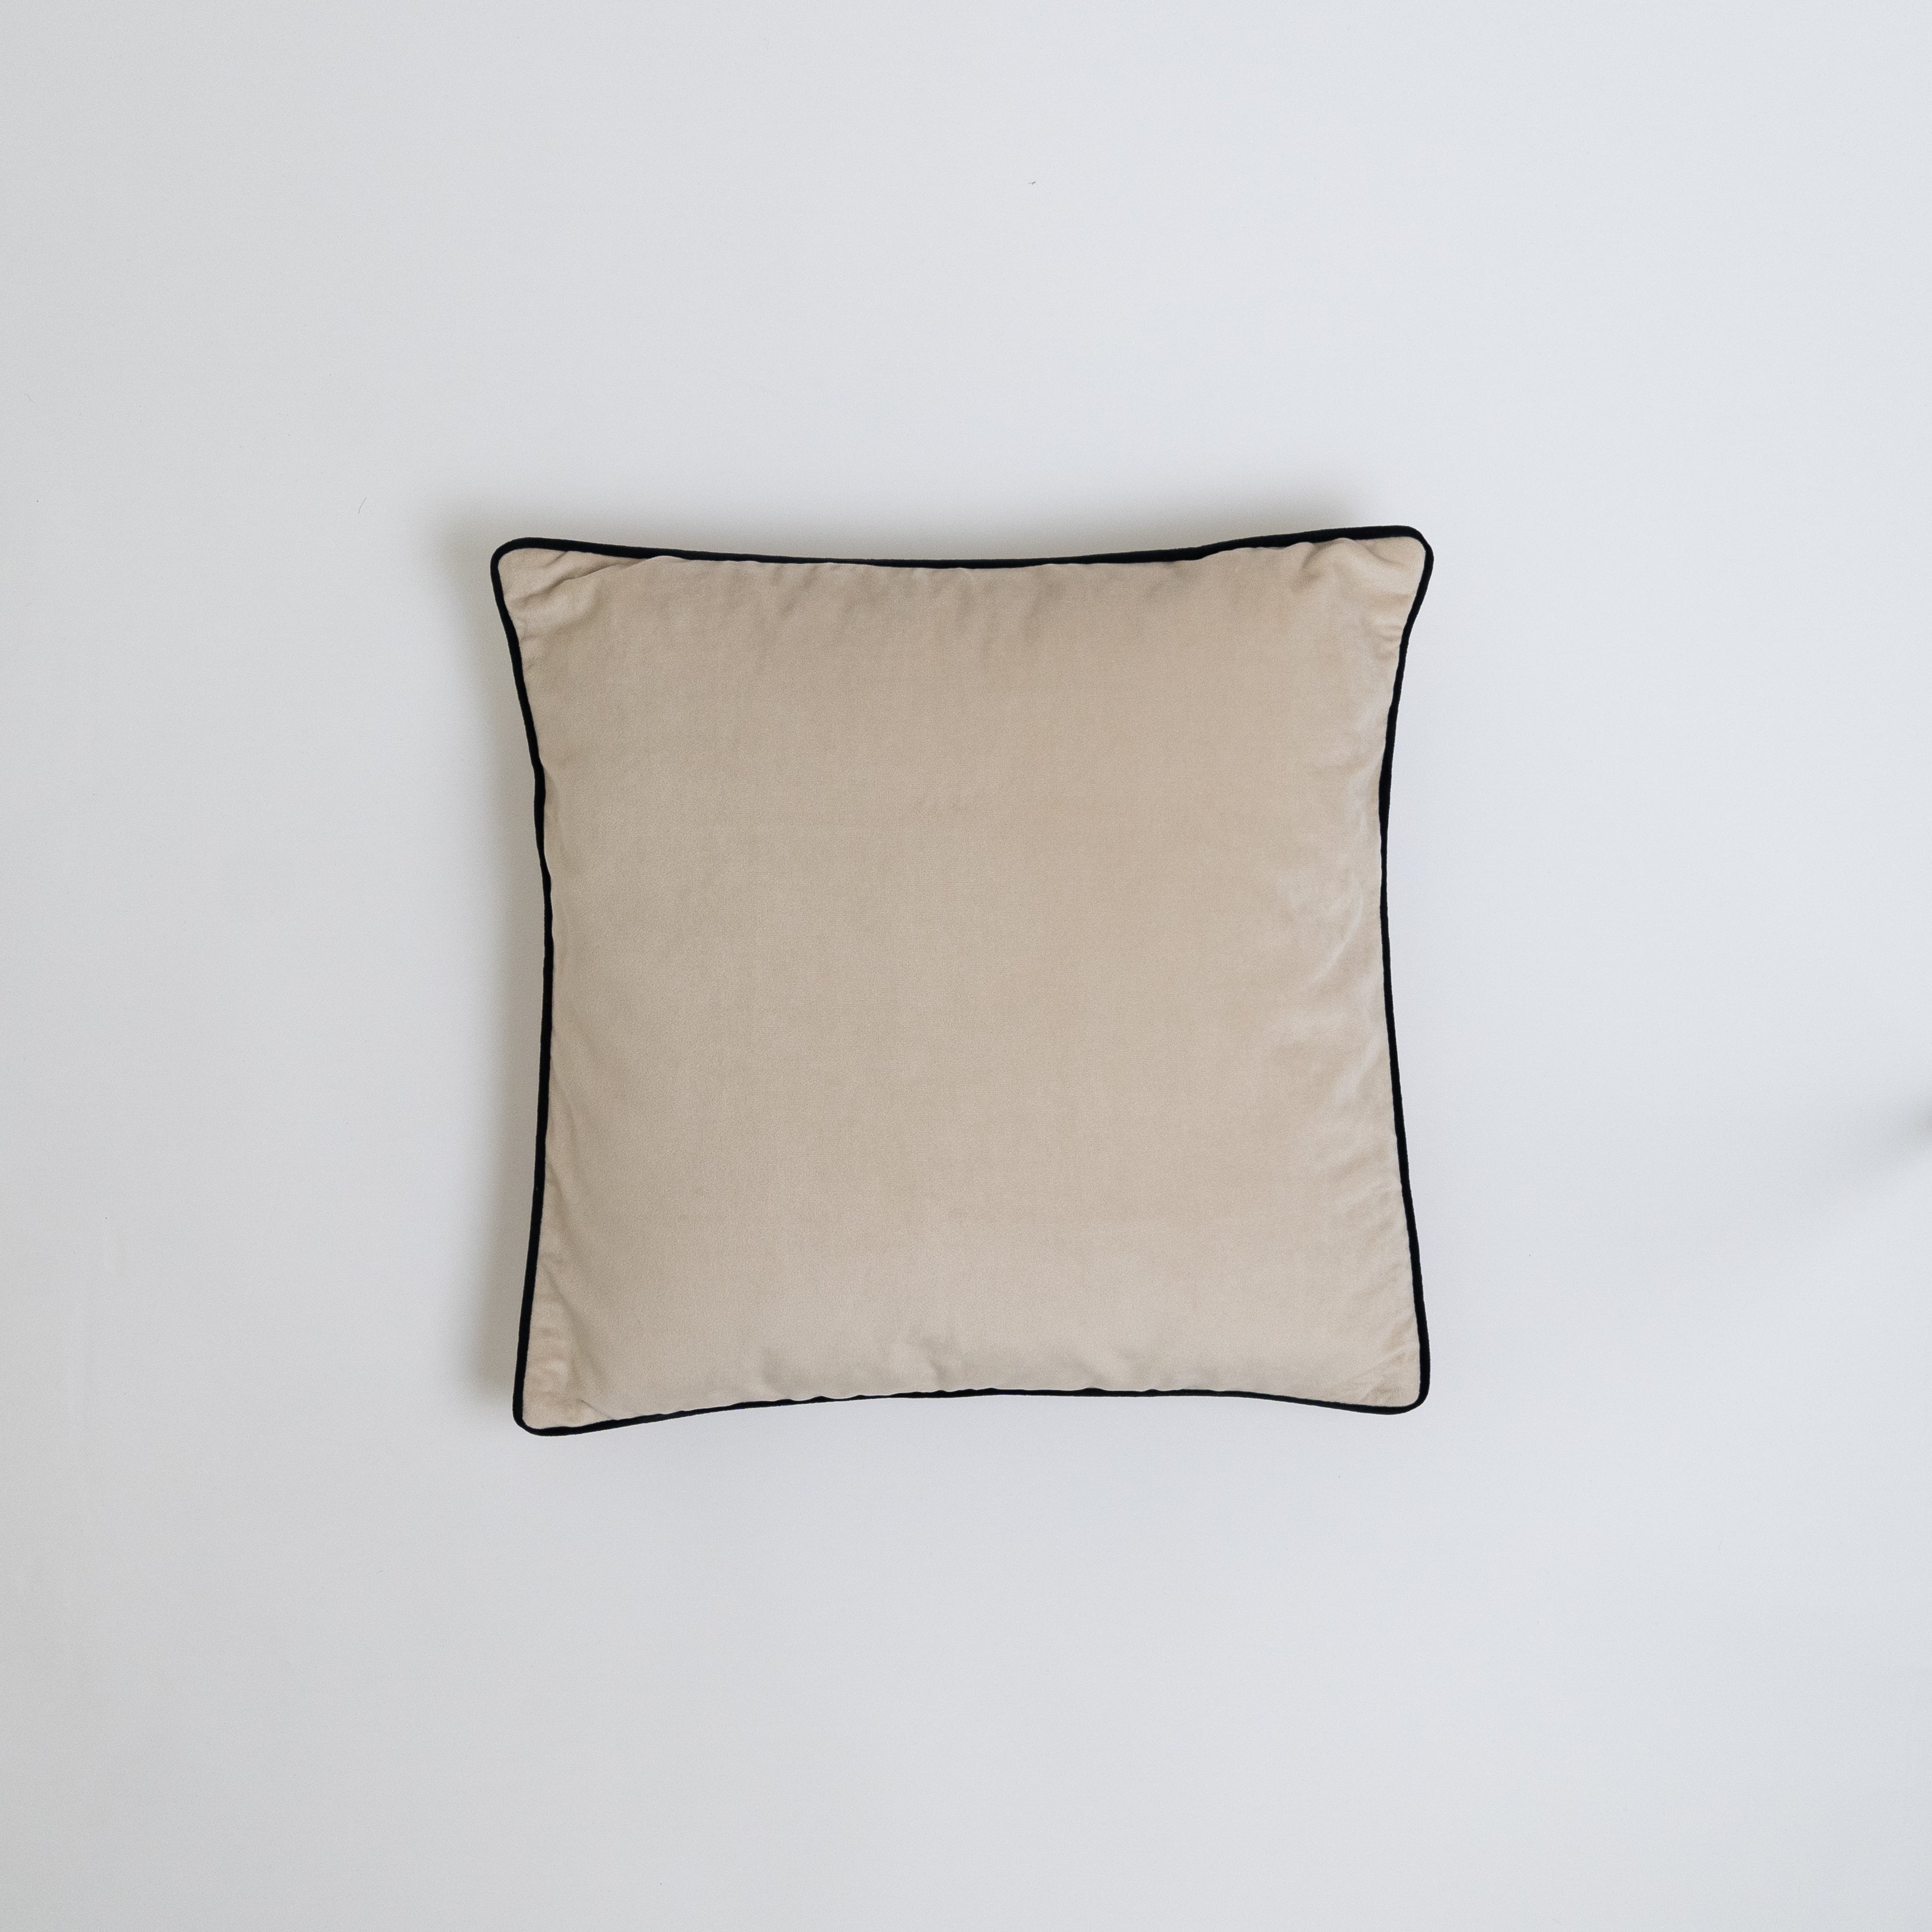 Cushion Cover 45 x45cm  - WS Living - UAE - Cushions Wood and steel Furnitures - Dubai